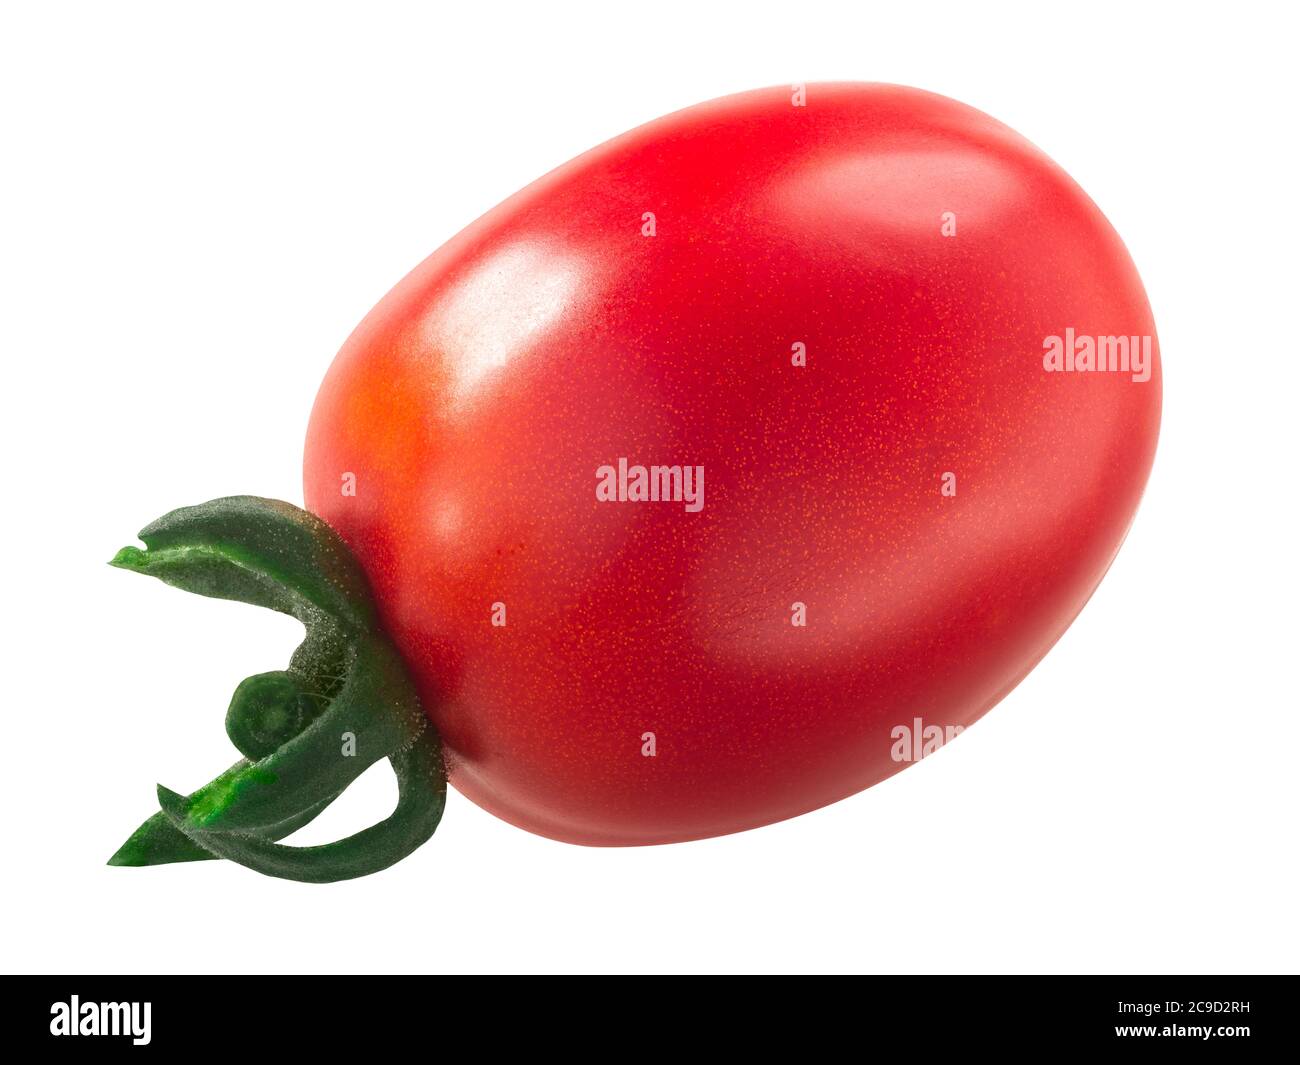 Principe Borghese cherry tomato, isolated Stock Photo